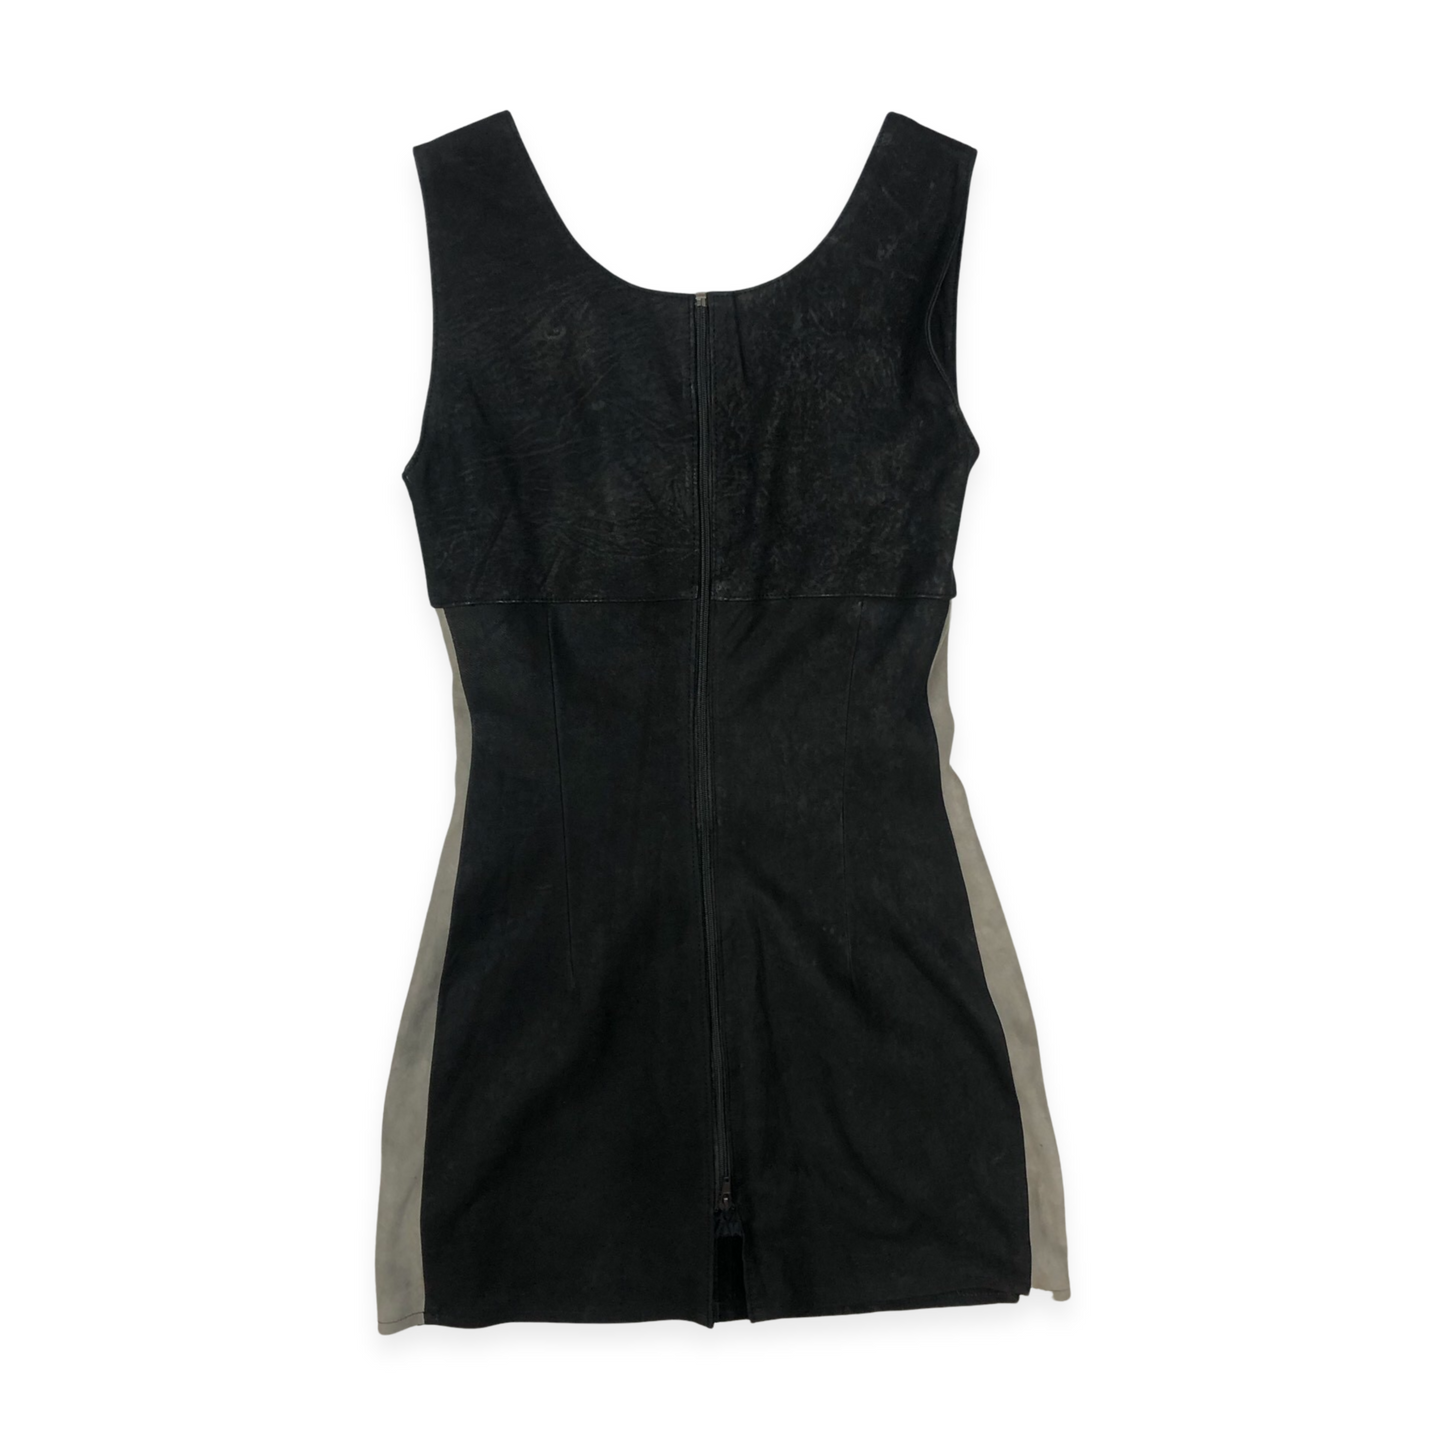 Vintage 80s 90s Black Leather Sleeveless Dress 8